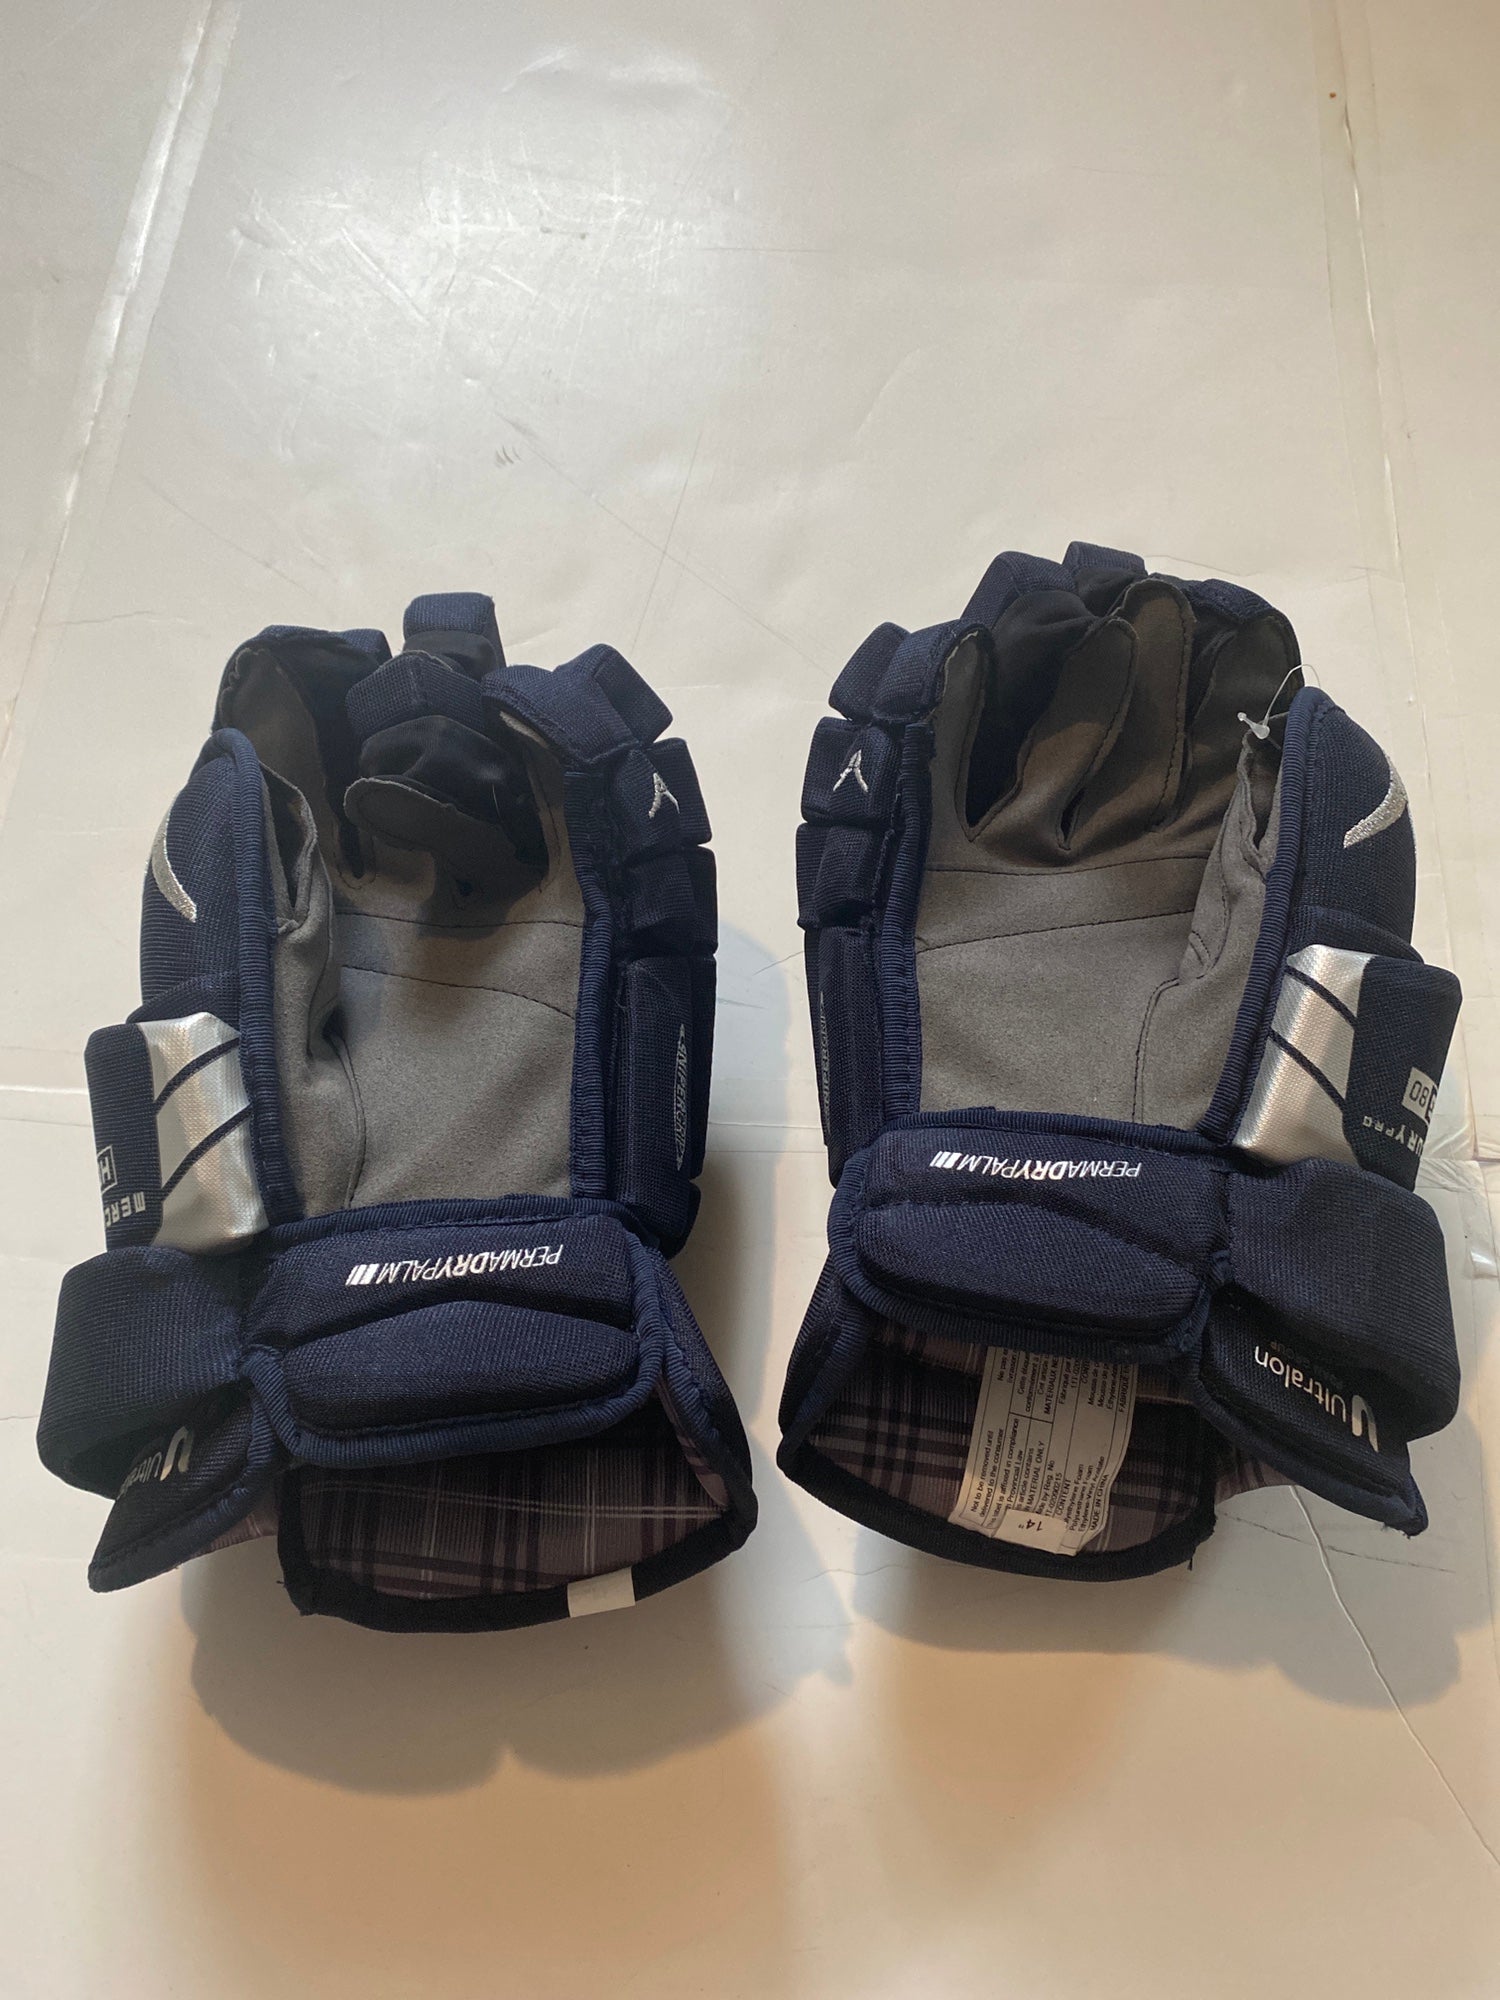 Verbero Mercury HG80 Senior ice hockey gloves Size 13” Red Retail $249.99 